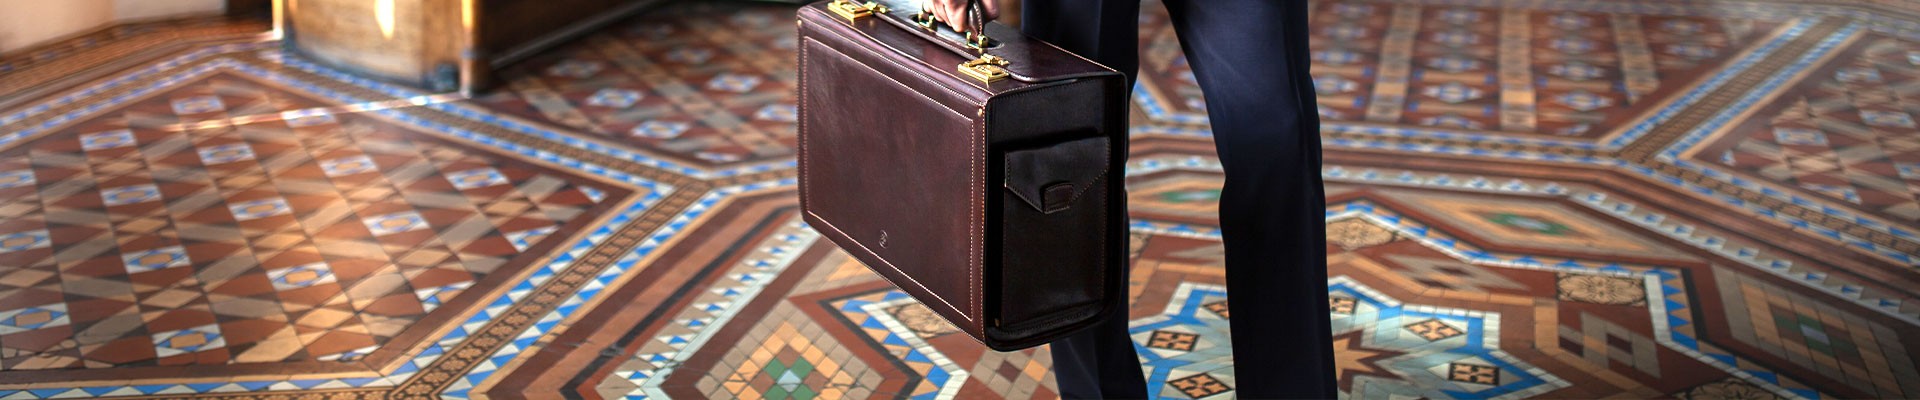 Pilot Case leather travel bag